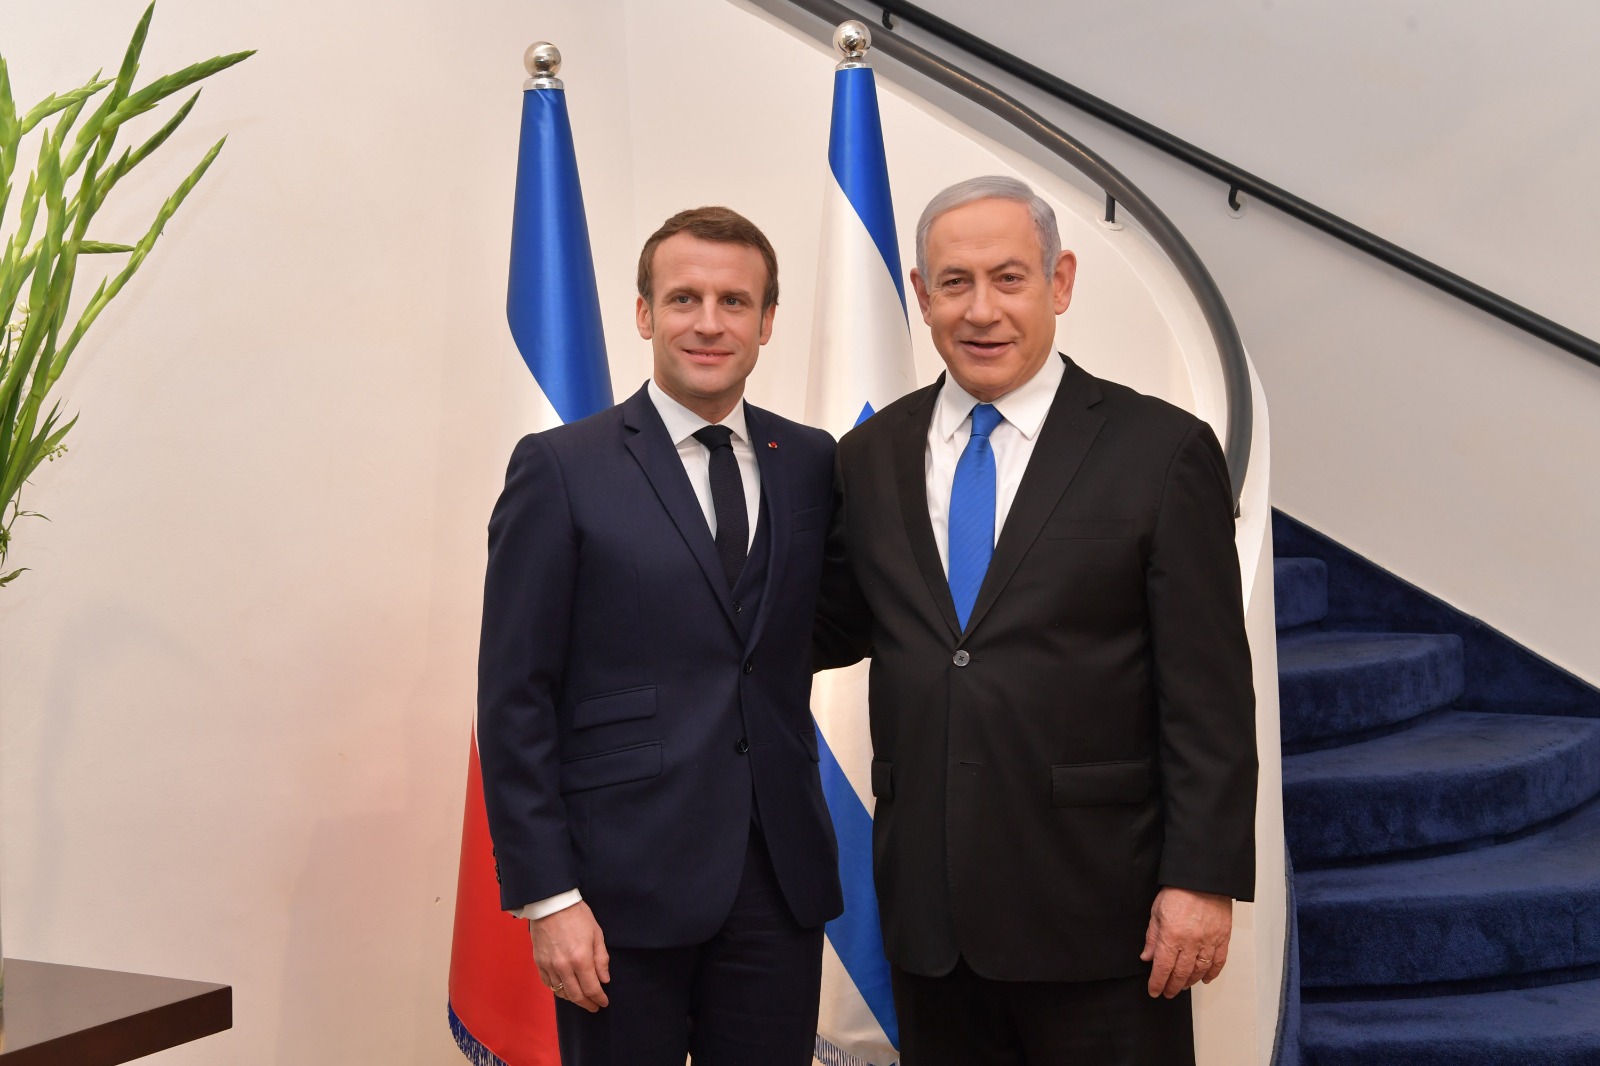 Hosting Macron for breakfast, Netanyahu kicks off marathon of meetings |  The Times of Israel